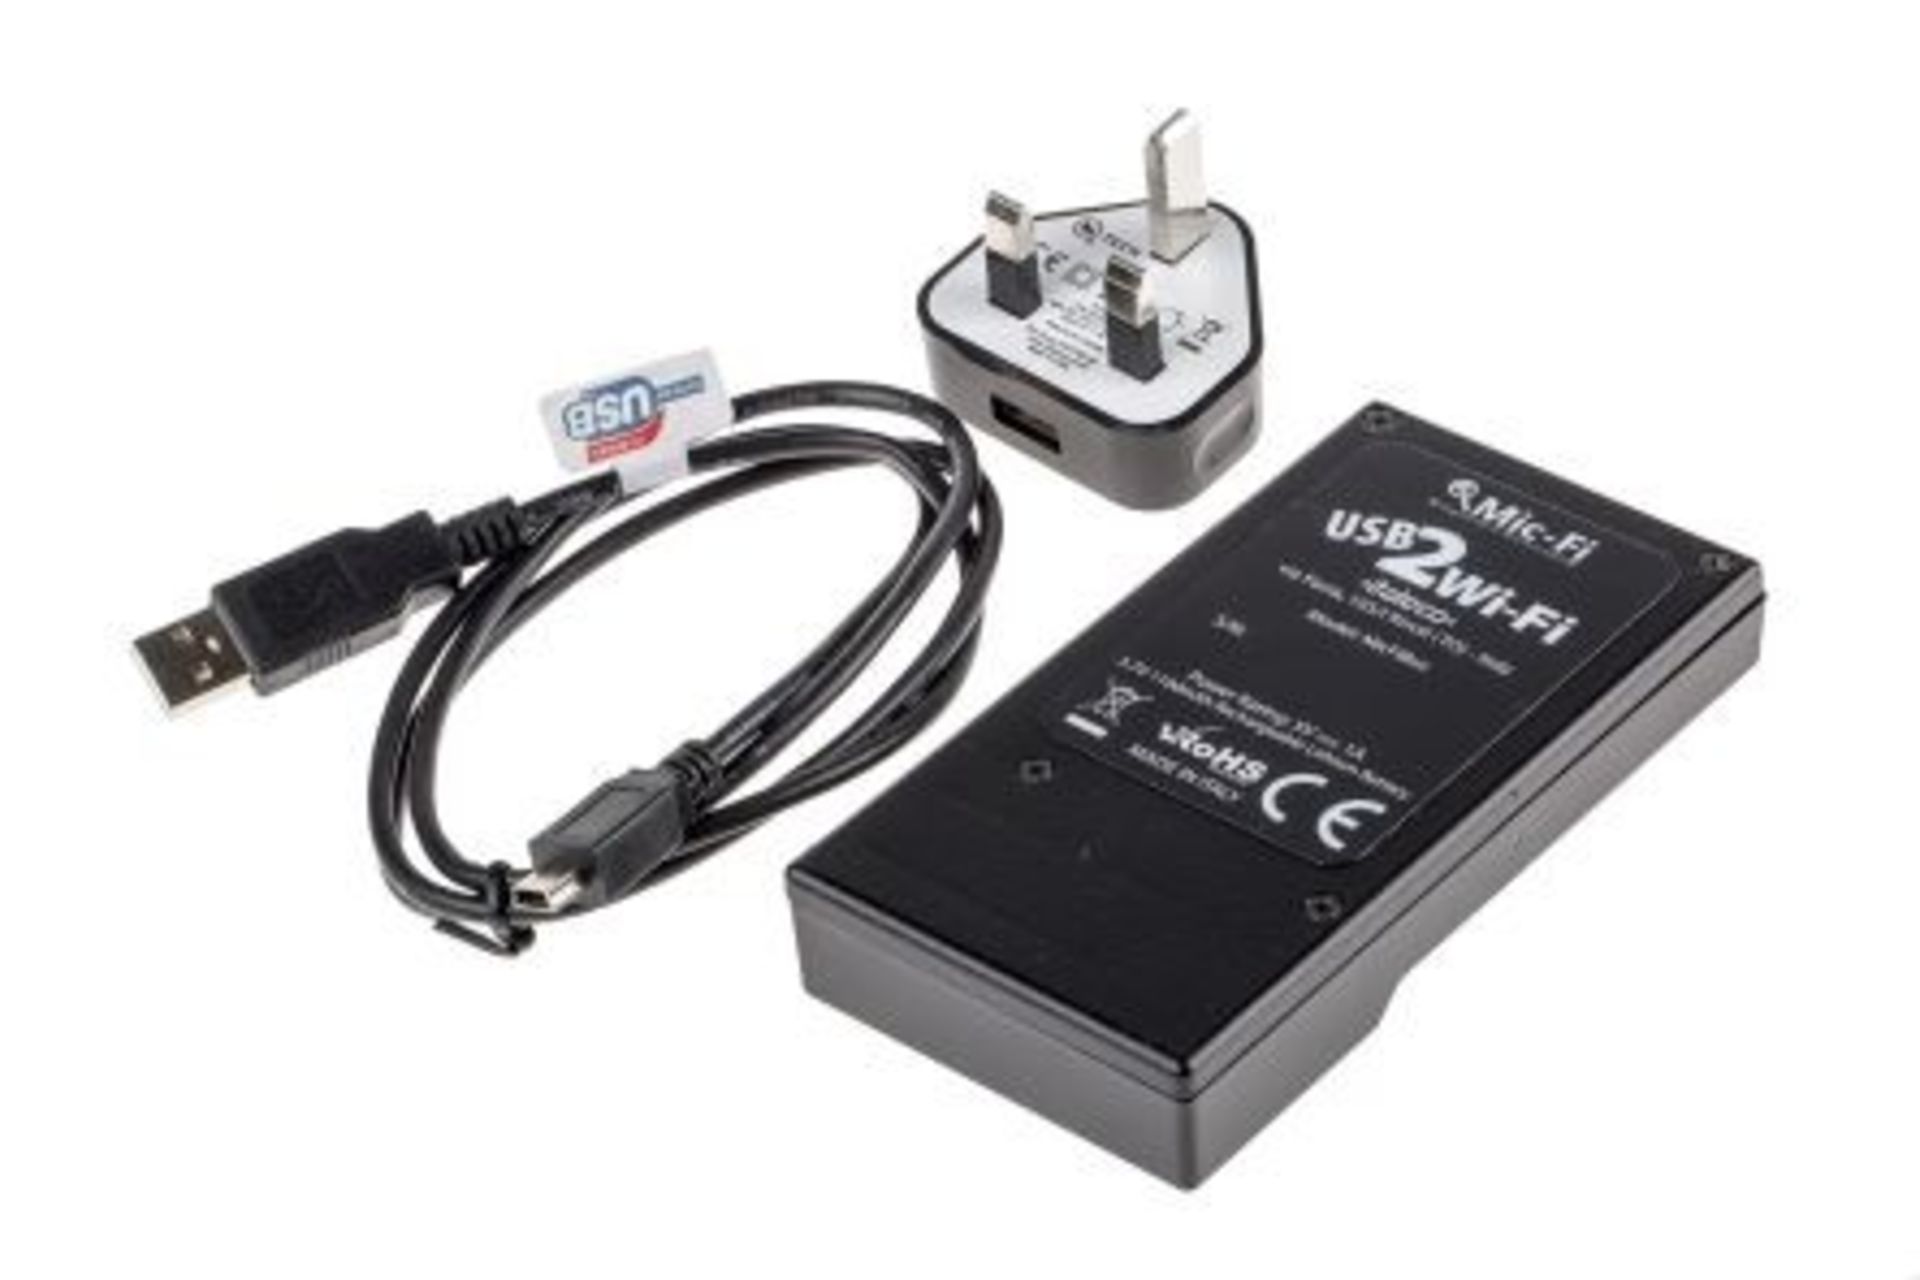 Wi Fi Digi box streamer USB-Wi-Fi - Microscope / Endoscope / Eyepiece Camera - Image 2 of 2